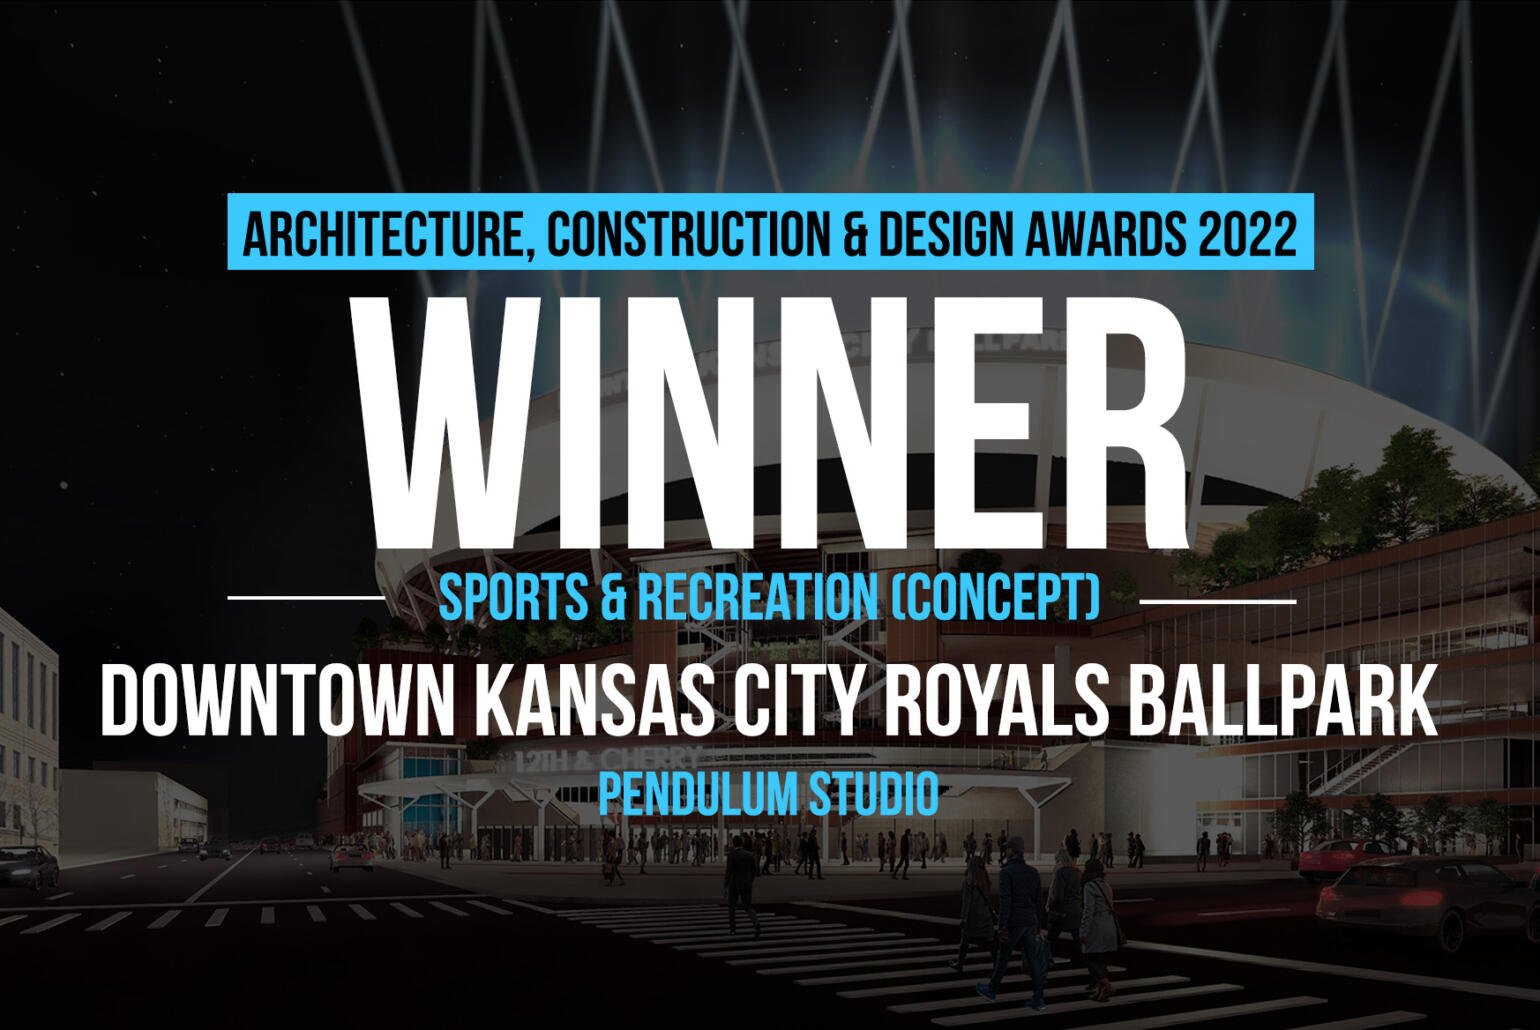 Downtown-Kansas-City-Royals-Ballpark-by-Pendulum-Studio-770x515@2x.jpeg